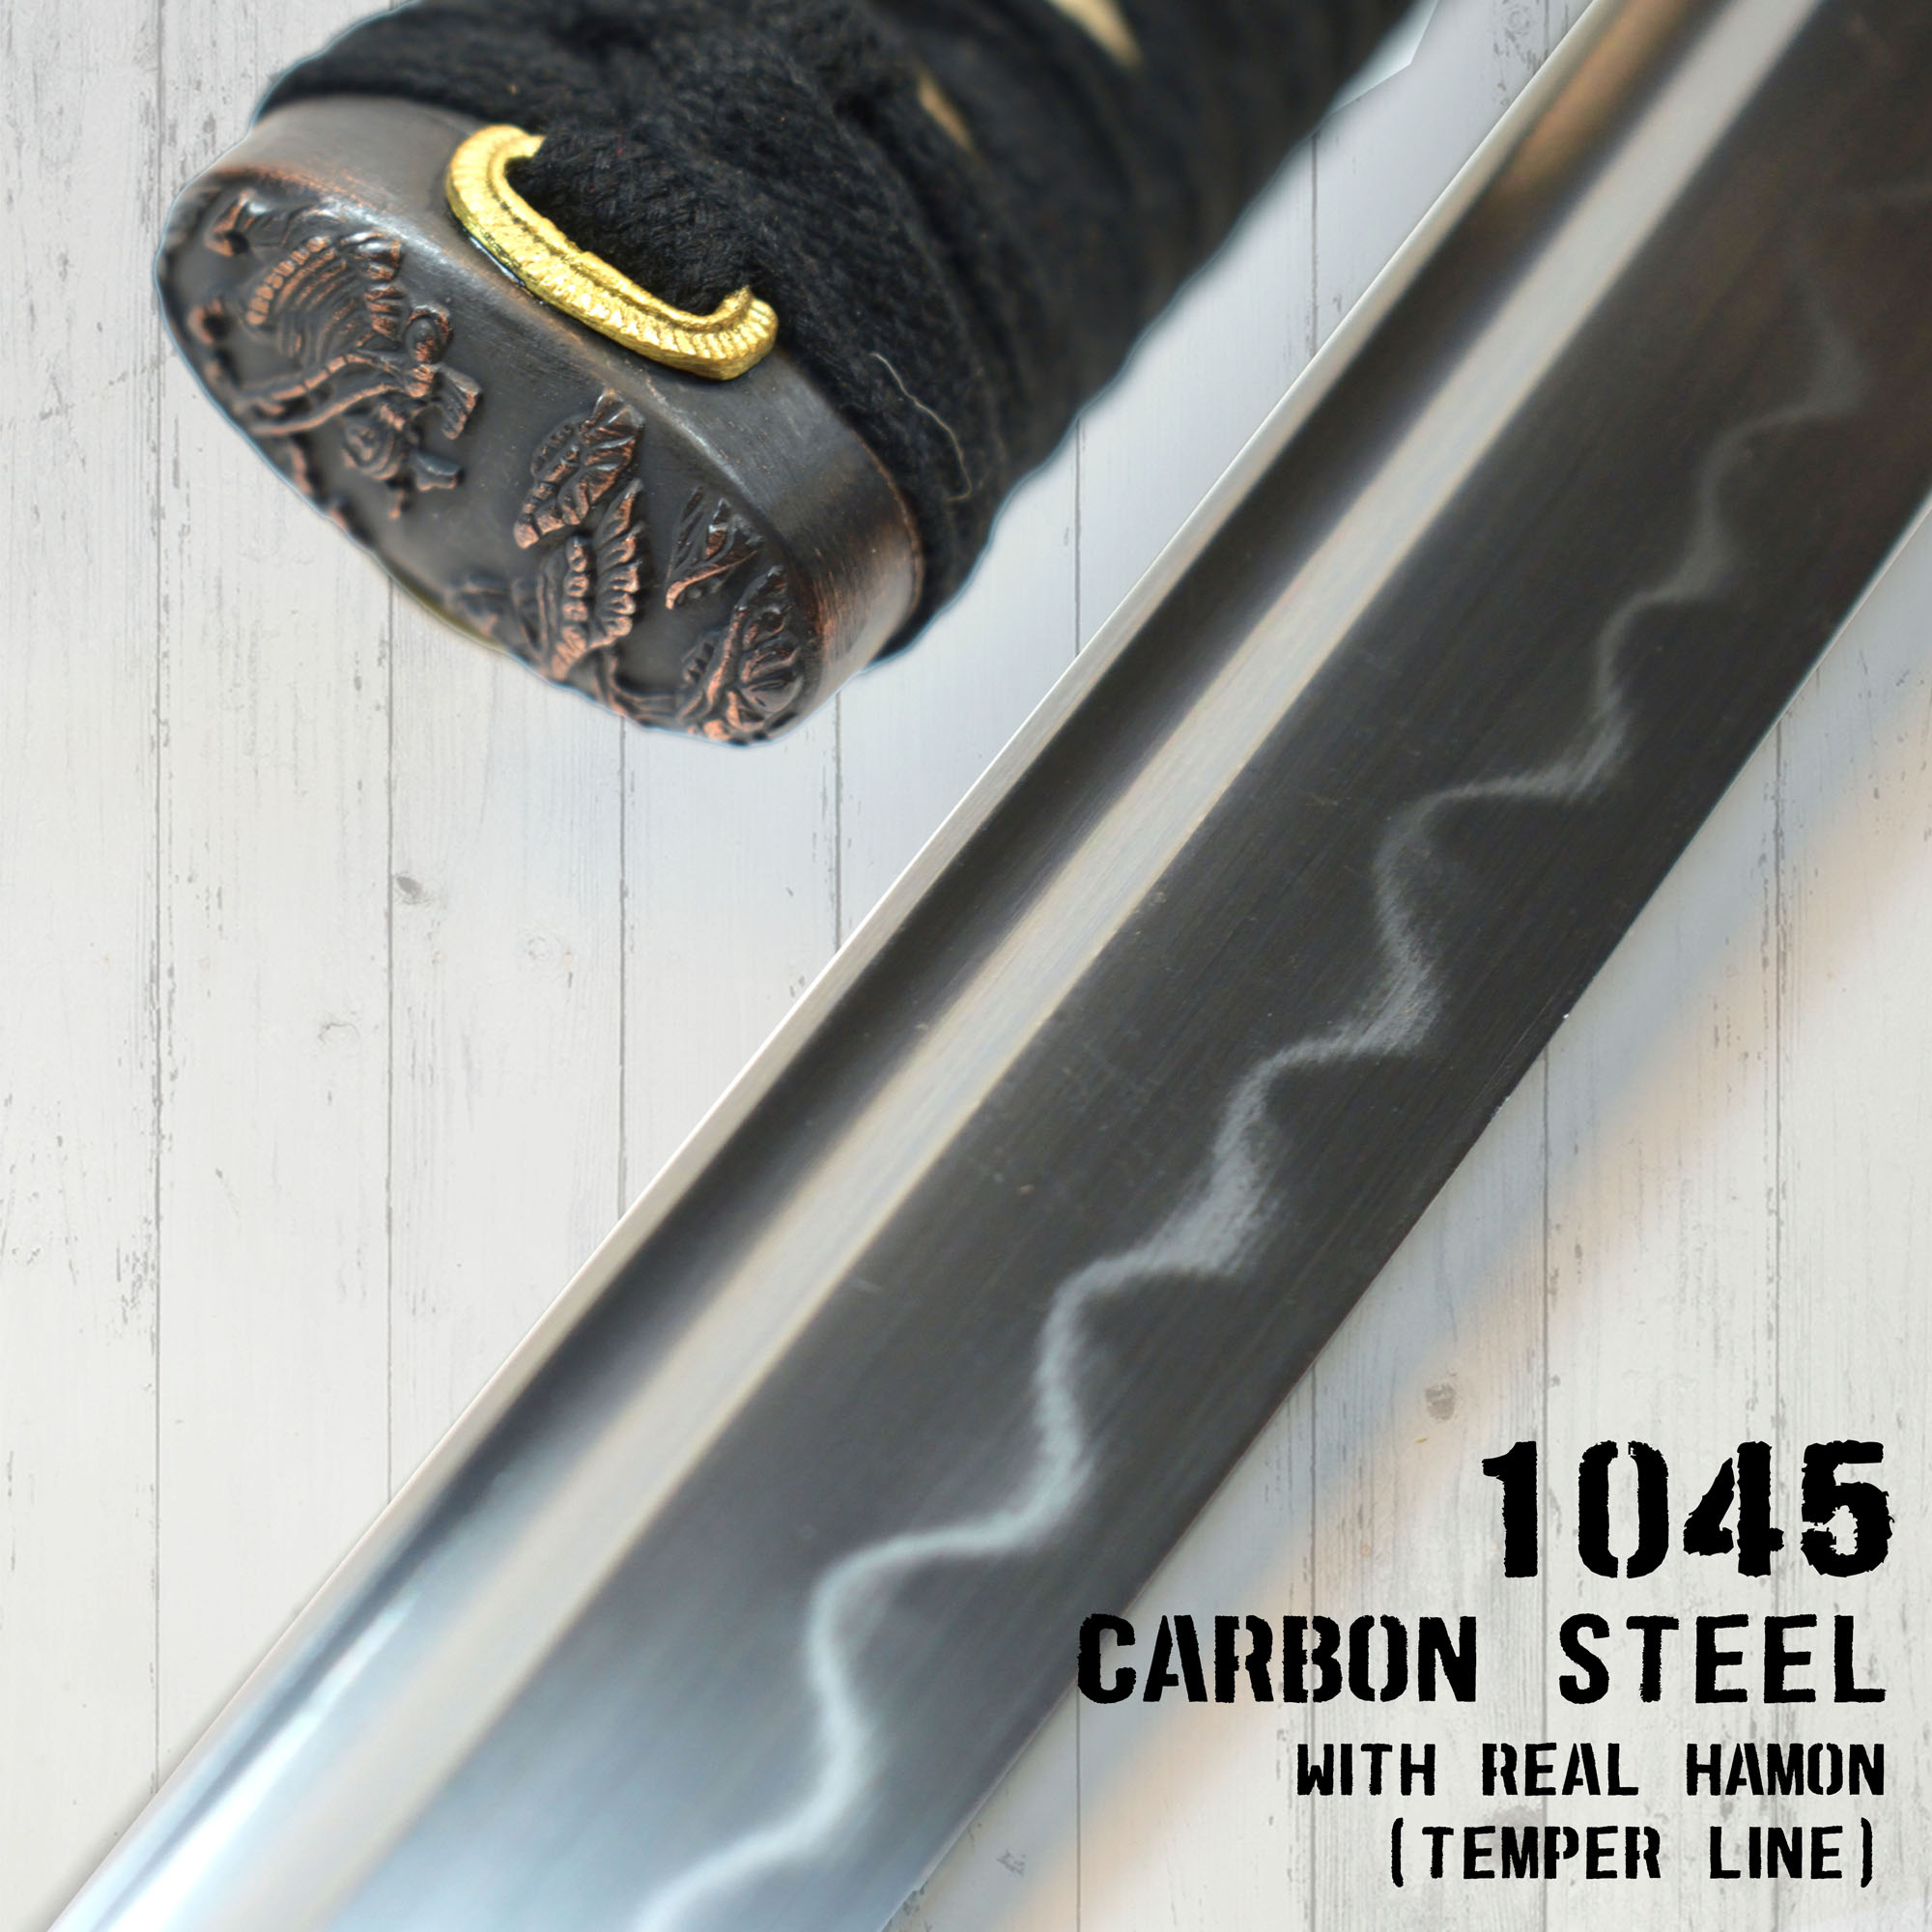 Samurai Komplettset (Akito Katana + Schwertständer + Schwertpflegest)